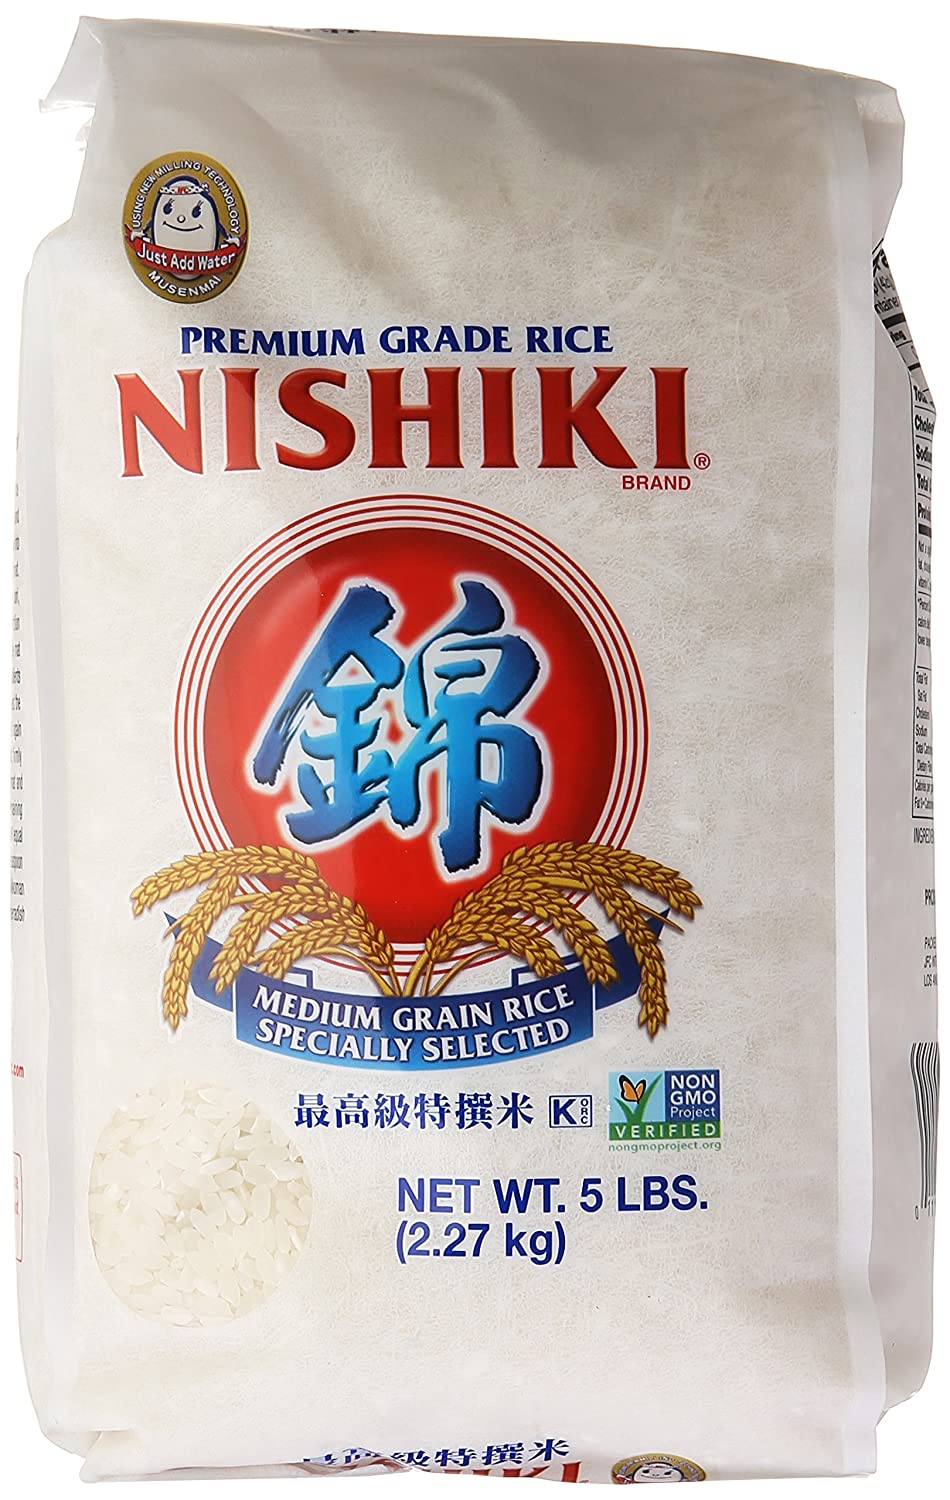 Nishiki Rice best for Weight Gain